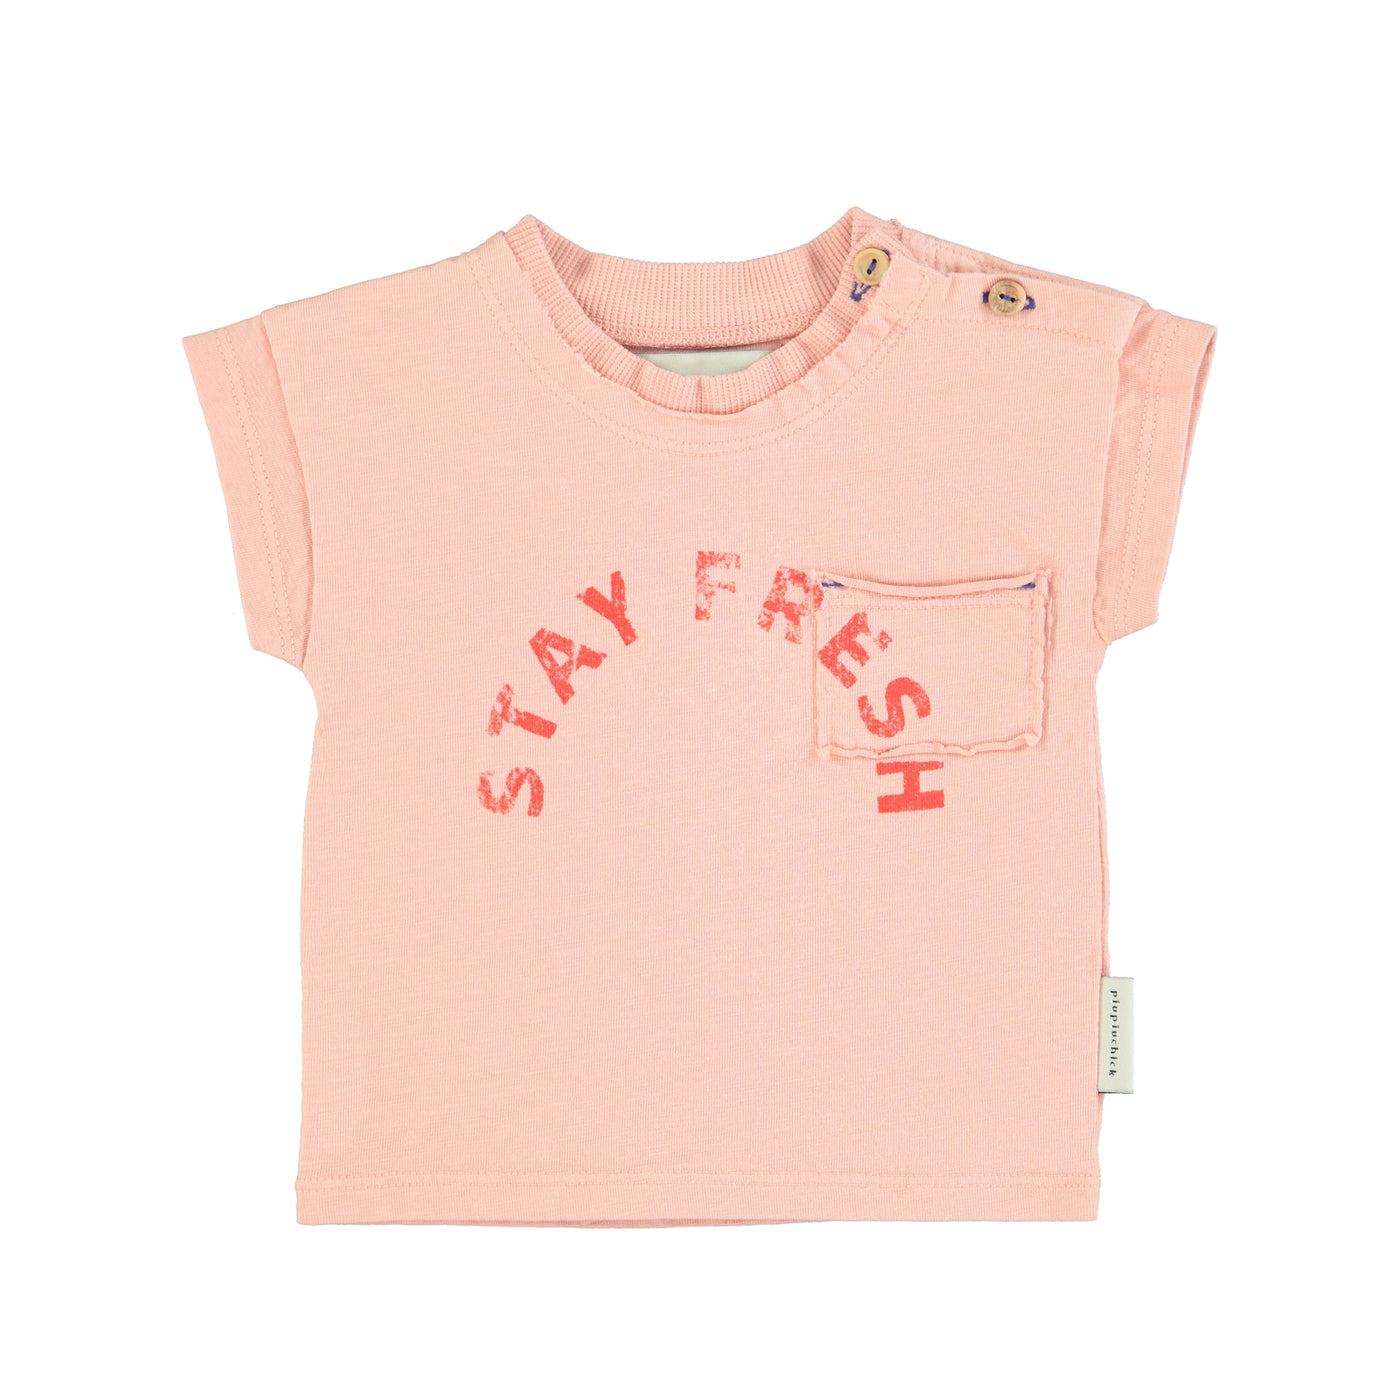 PIUPIUCHICK - T-Shirt Light Pink "Stay Fresh" - Le CirQue Kidsconceptstore 